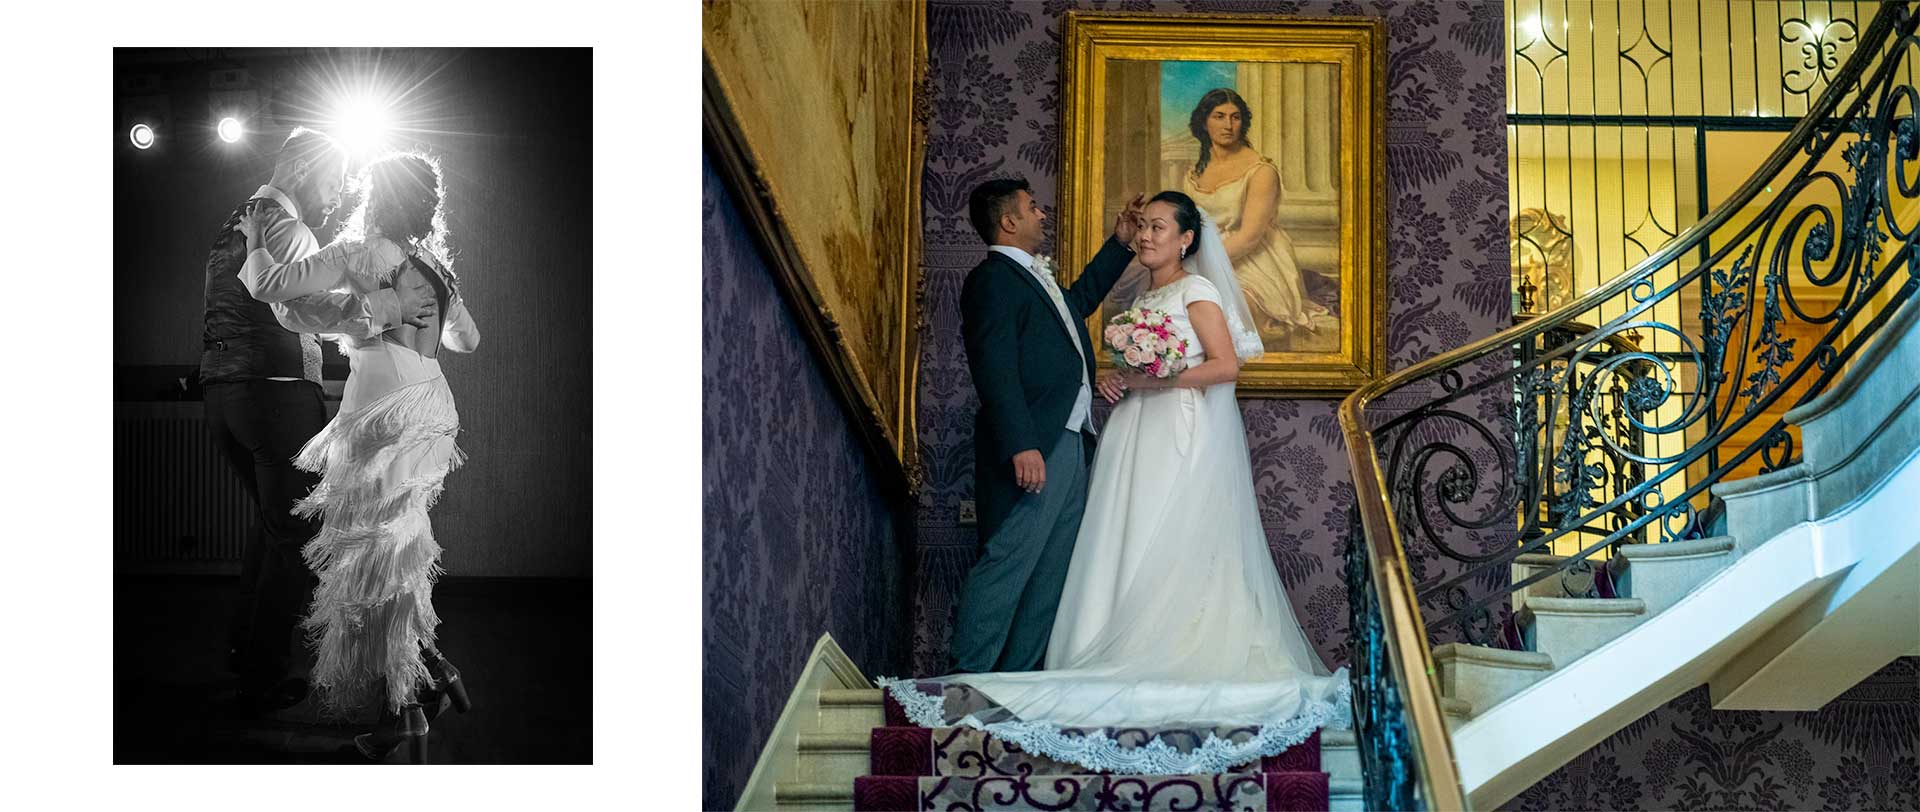 Arts-&-Photo-Wedding-London-Uk-Wedding-Photography-&-Videography-Slide-6